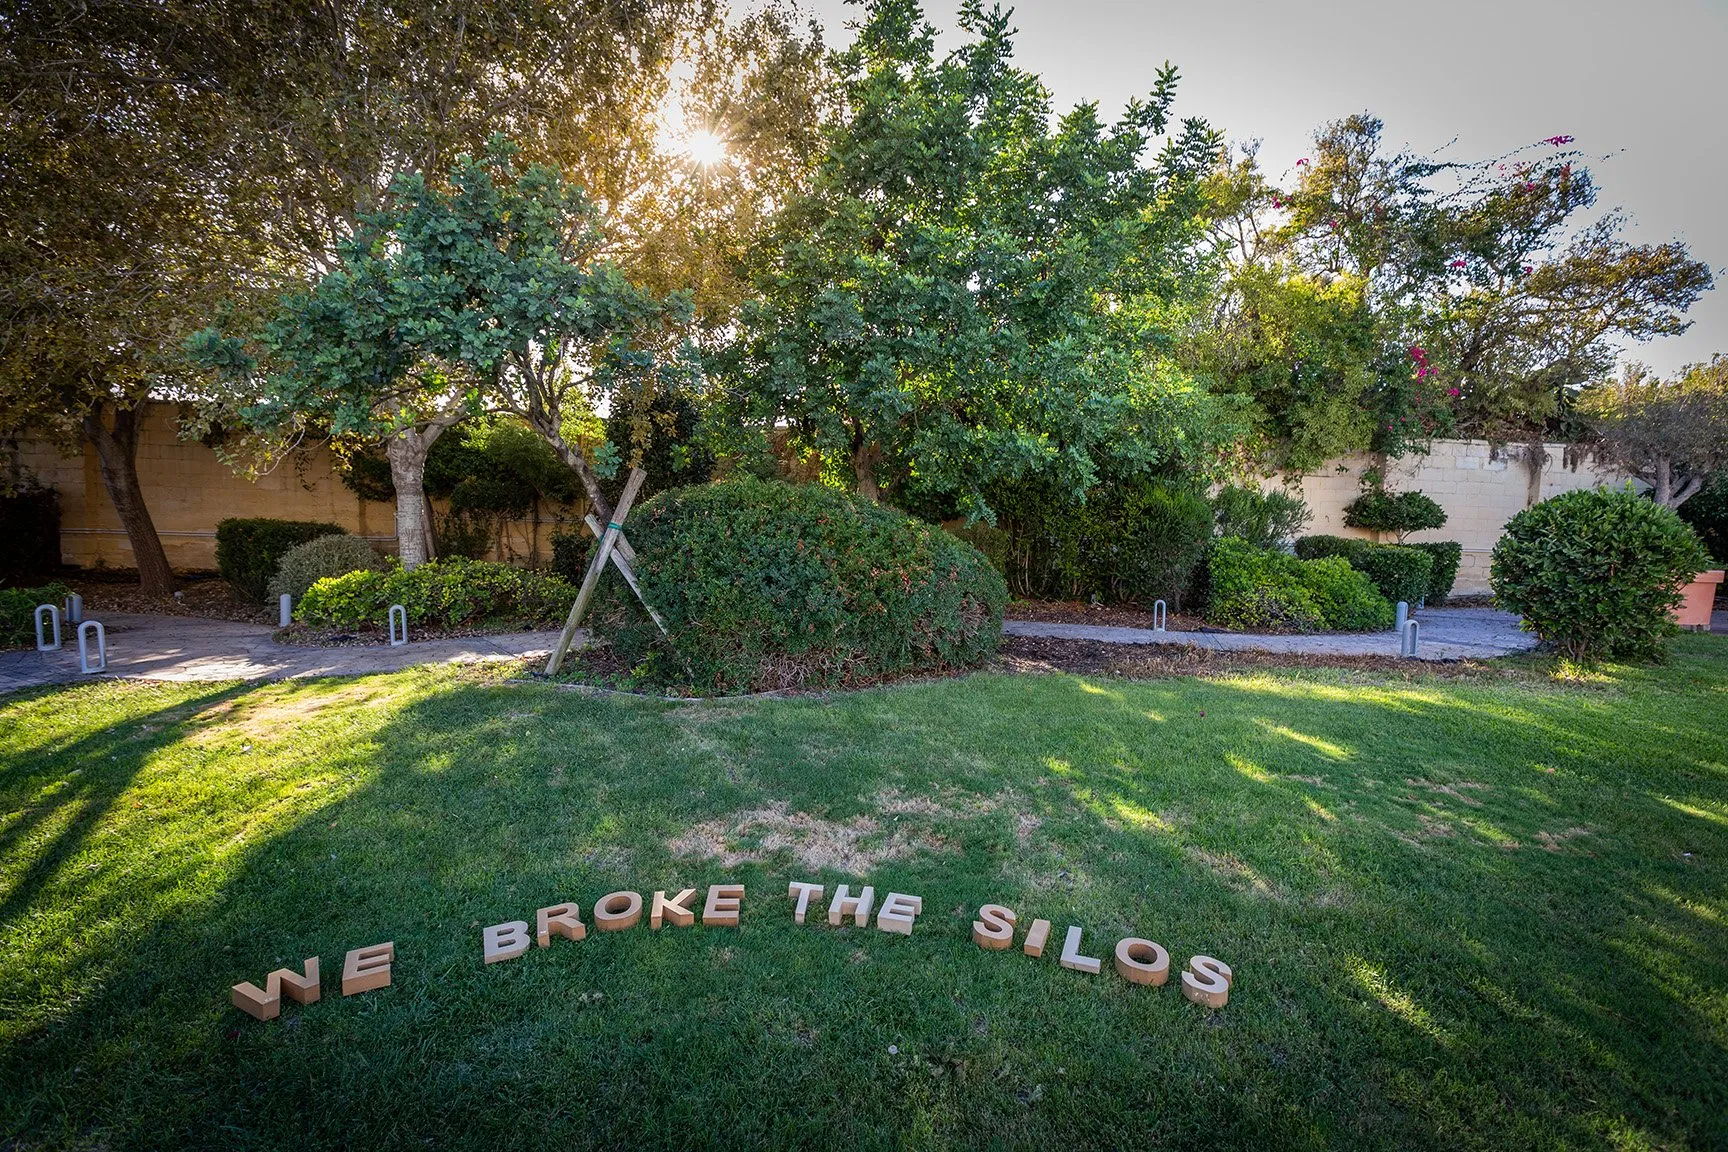 Lawn with We Broke the Silos written on it